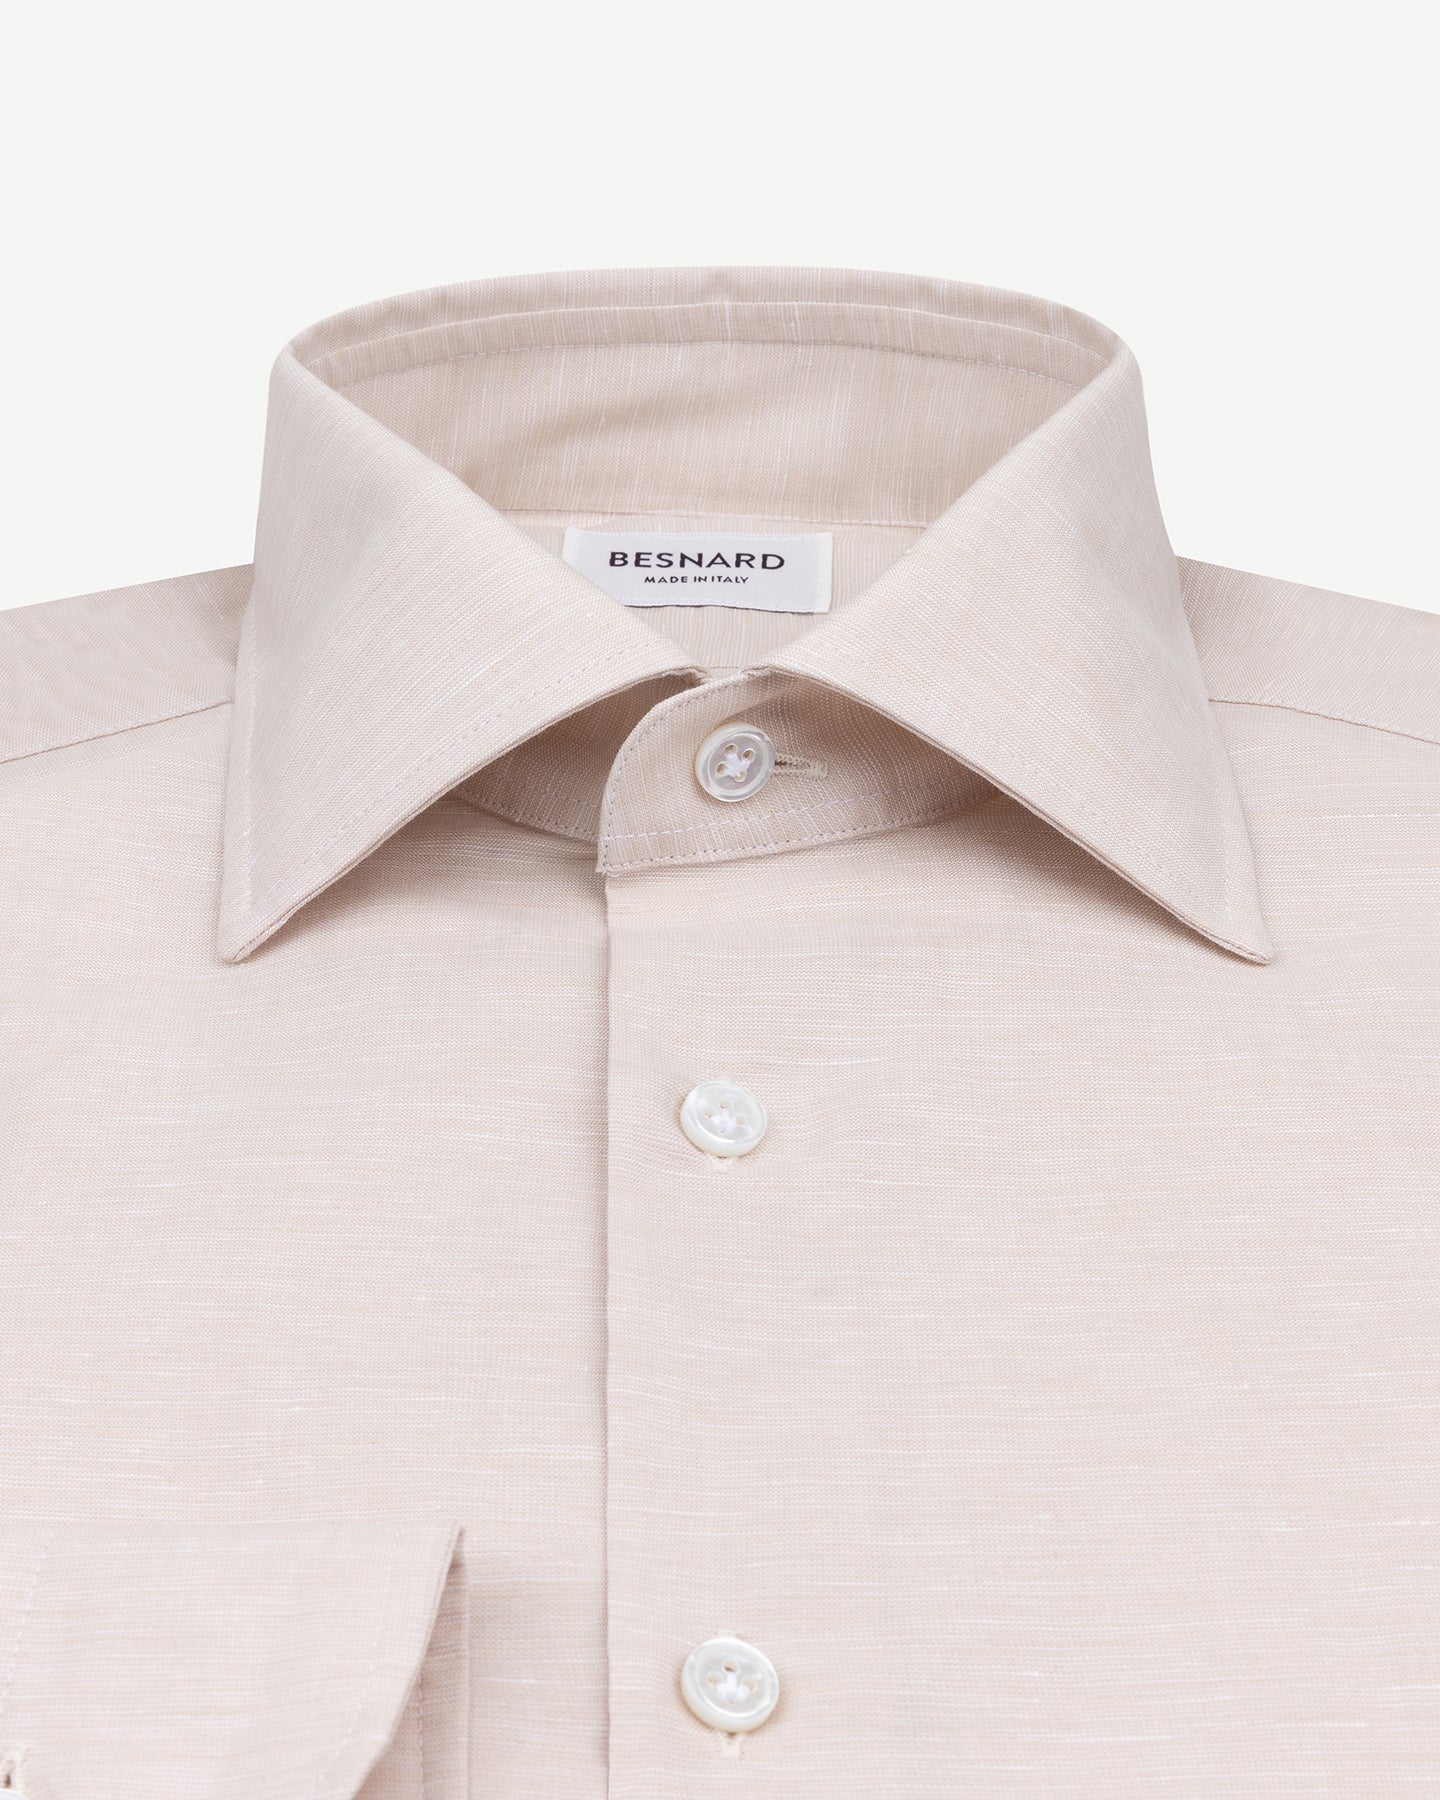 Beige cotton linen dress shirt with spread collar